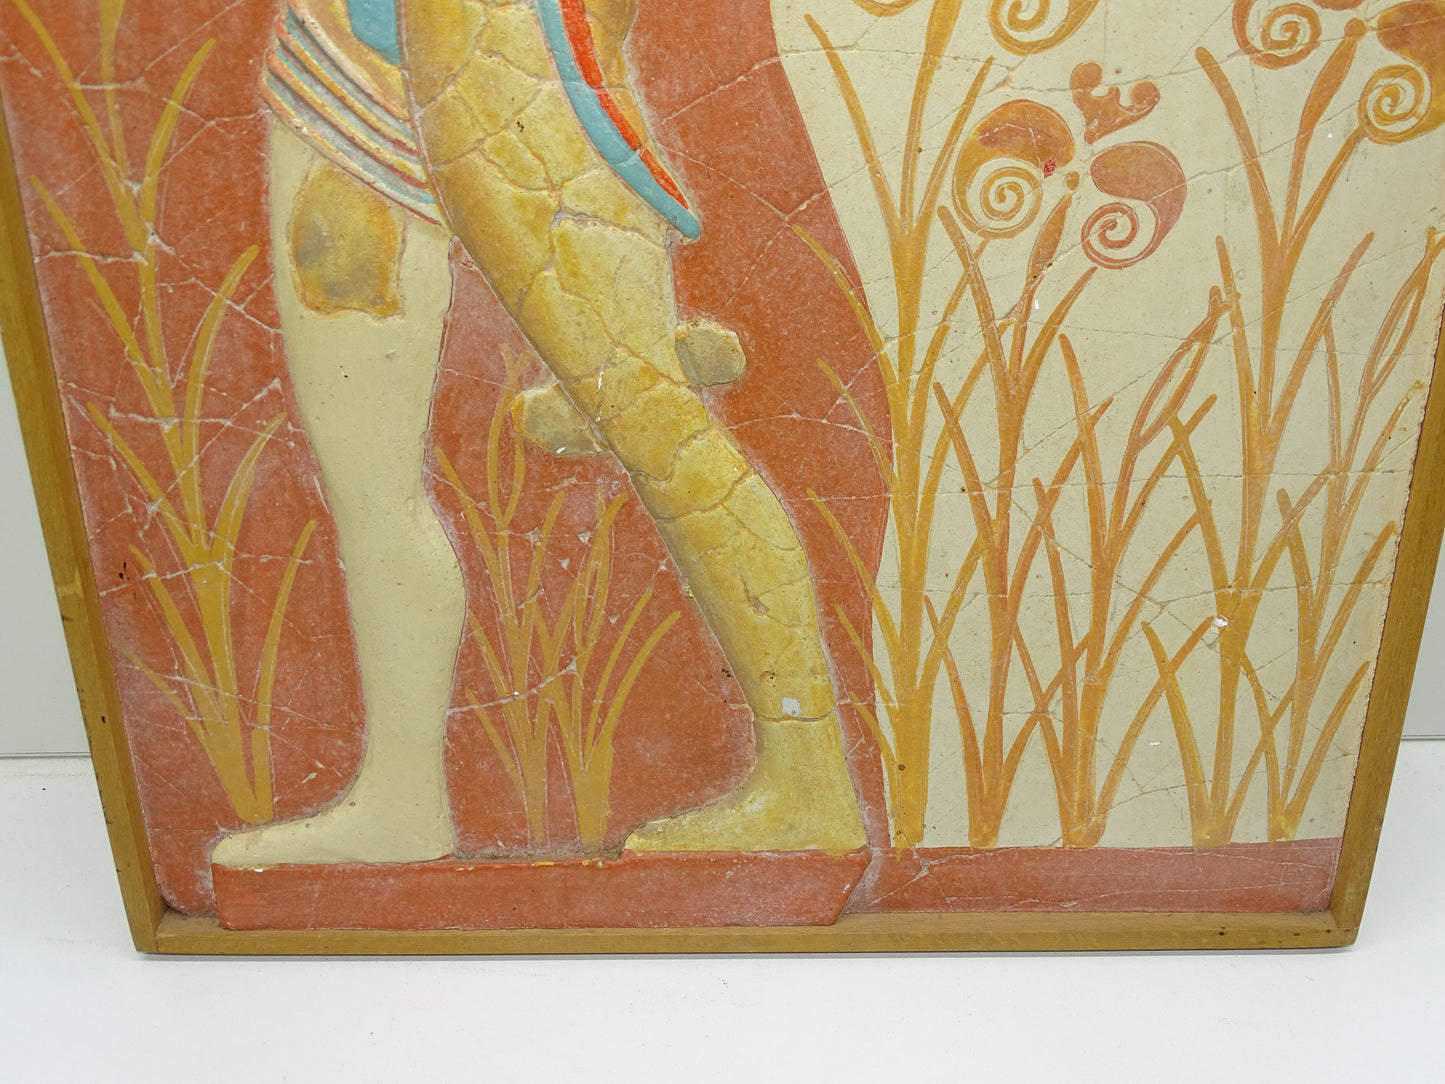 Schilderij / Fresco: The Priest King, Prince Of The Lilies, No. 339